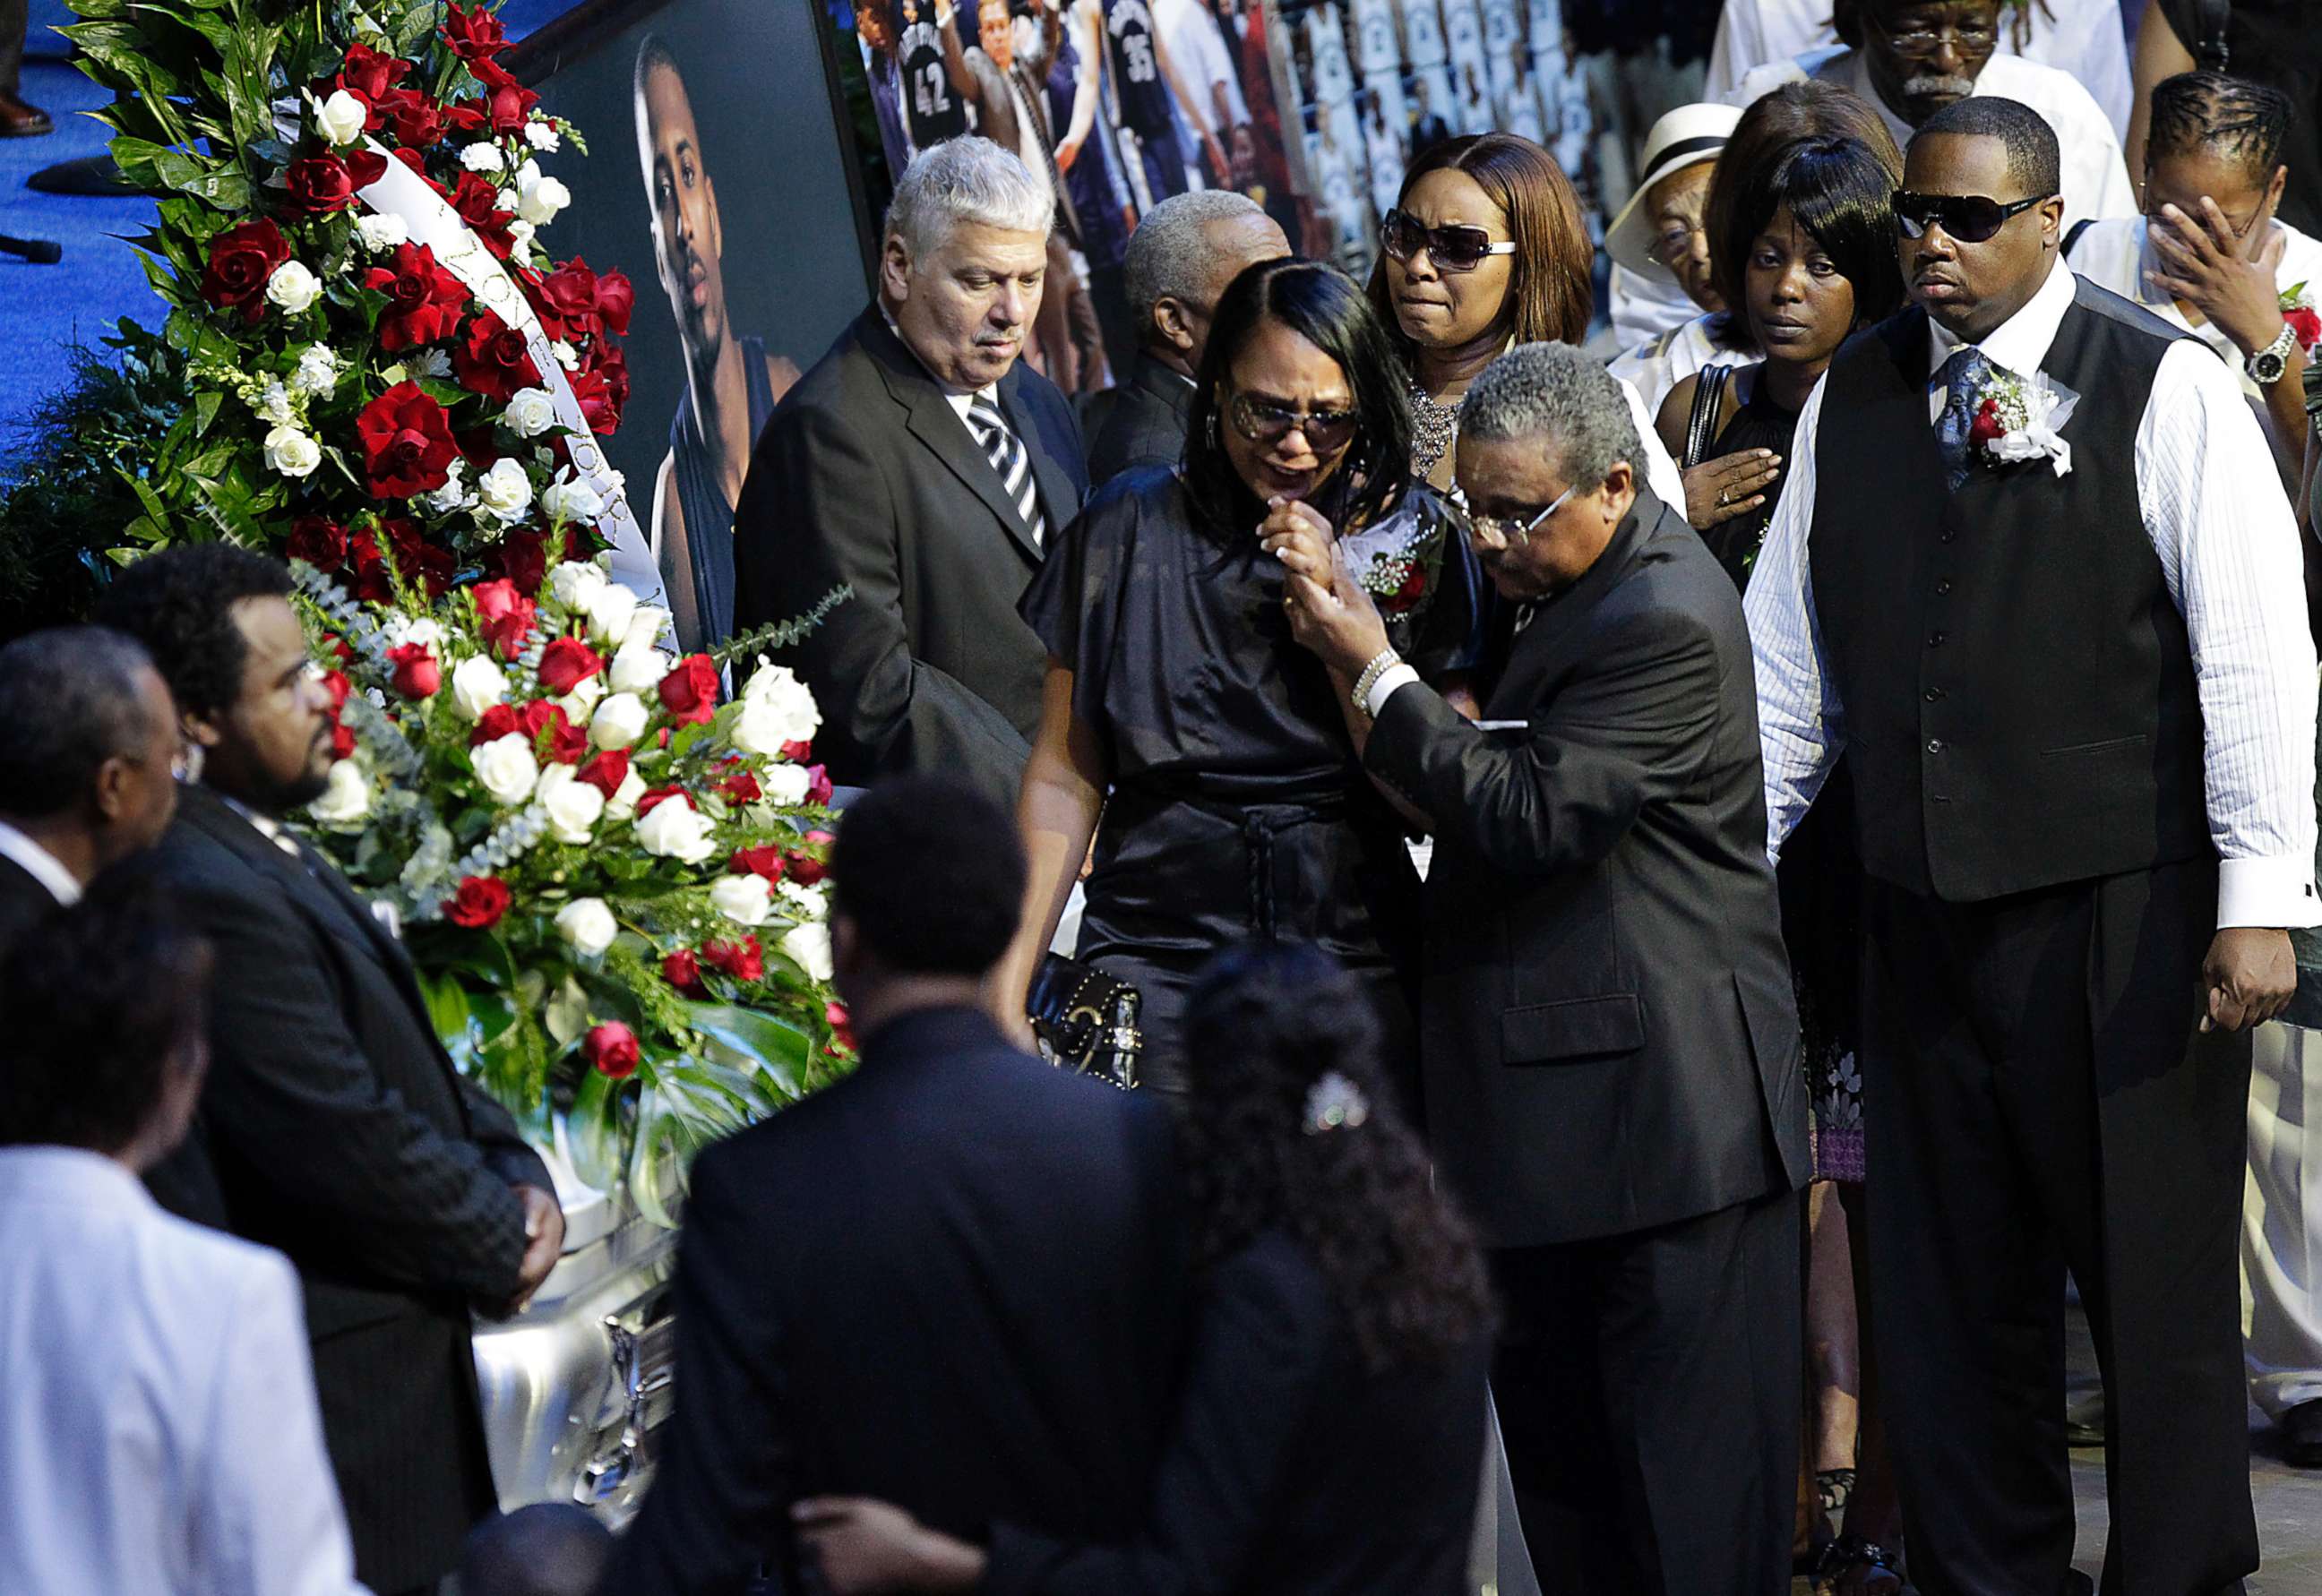 PHOTO: In this Aug. 4, 2010, file photo, Sherra Wright, the ex-wife of slain NBA basketball player Lorenzen Wright, grieves at the casket of Lorenzen Wright during a memorial service at the FedExForum in Memphis, Tenn. 